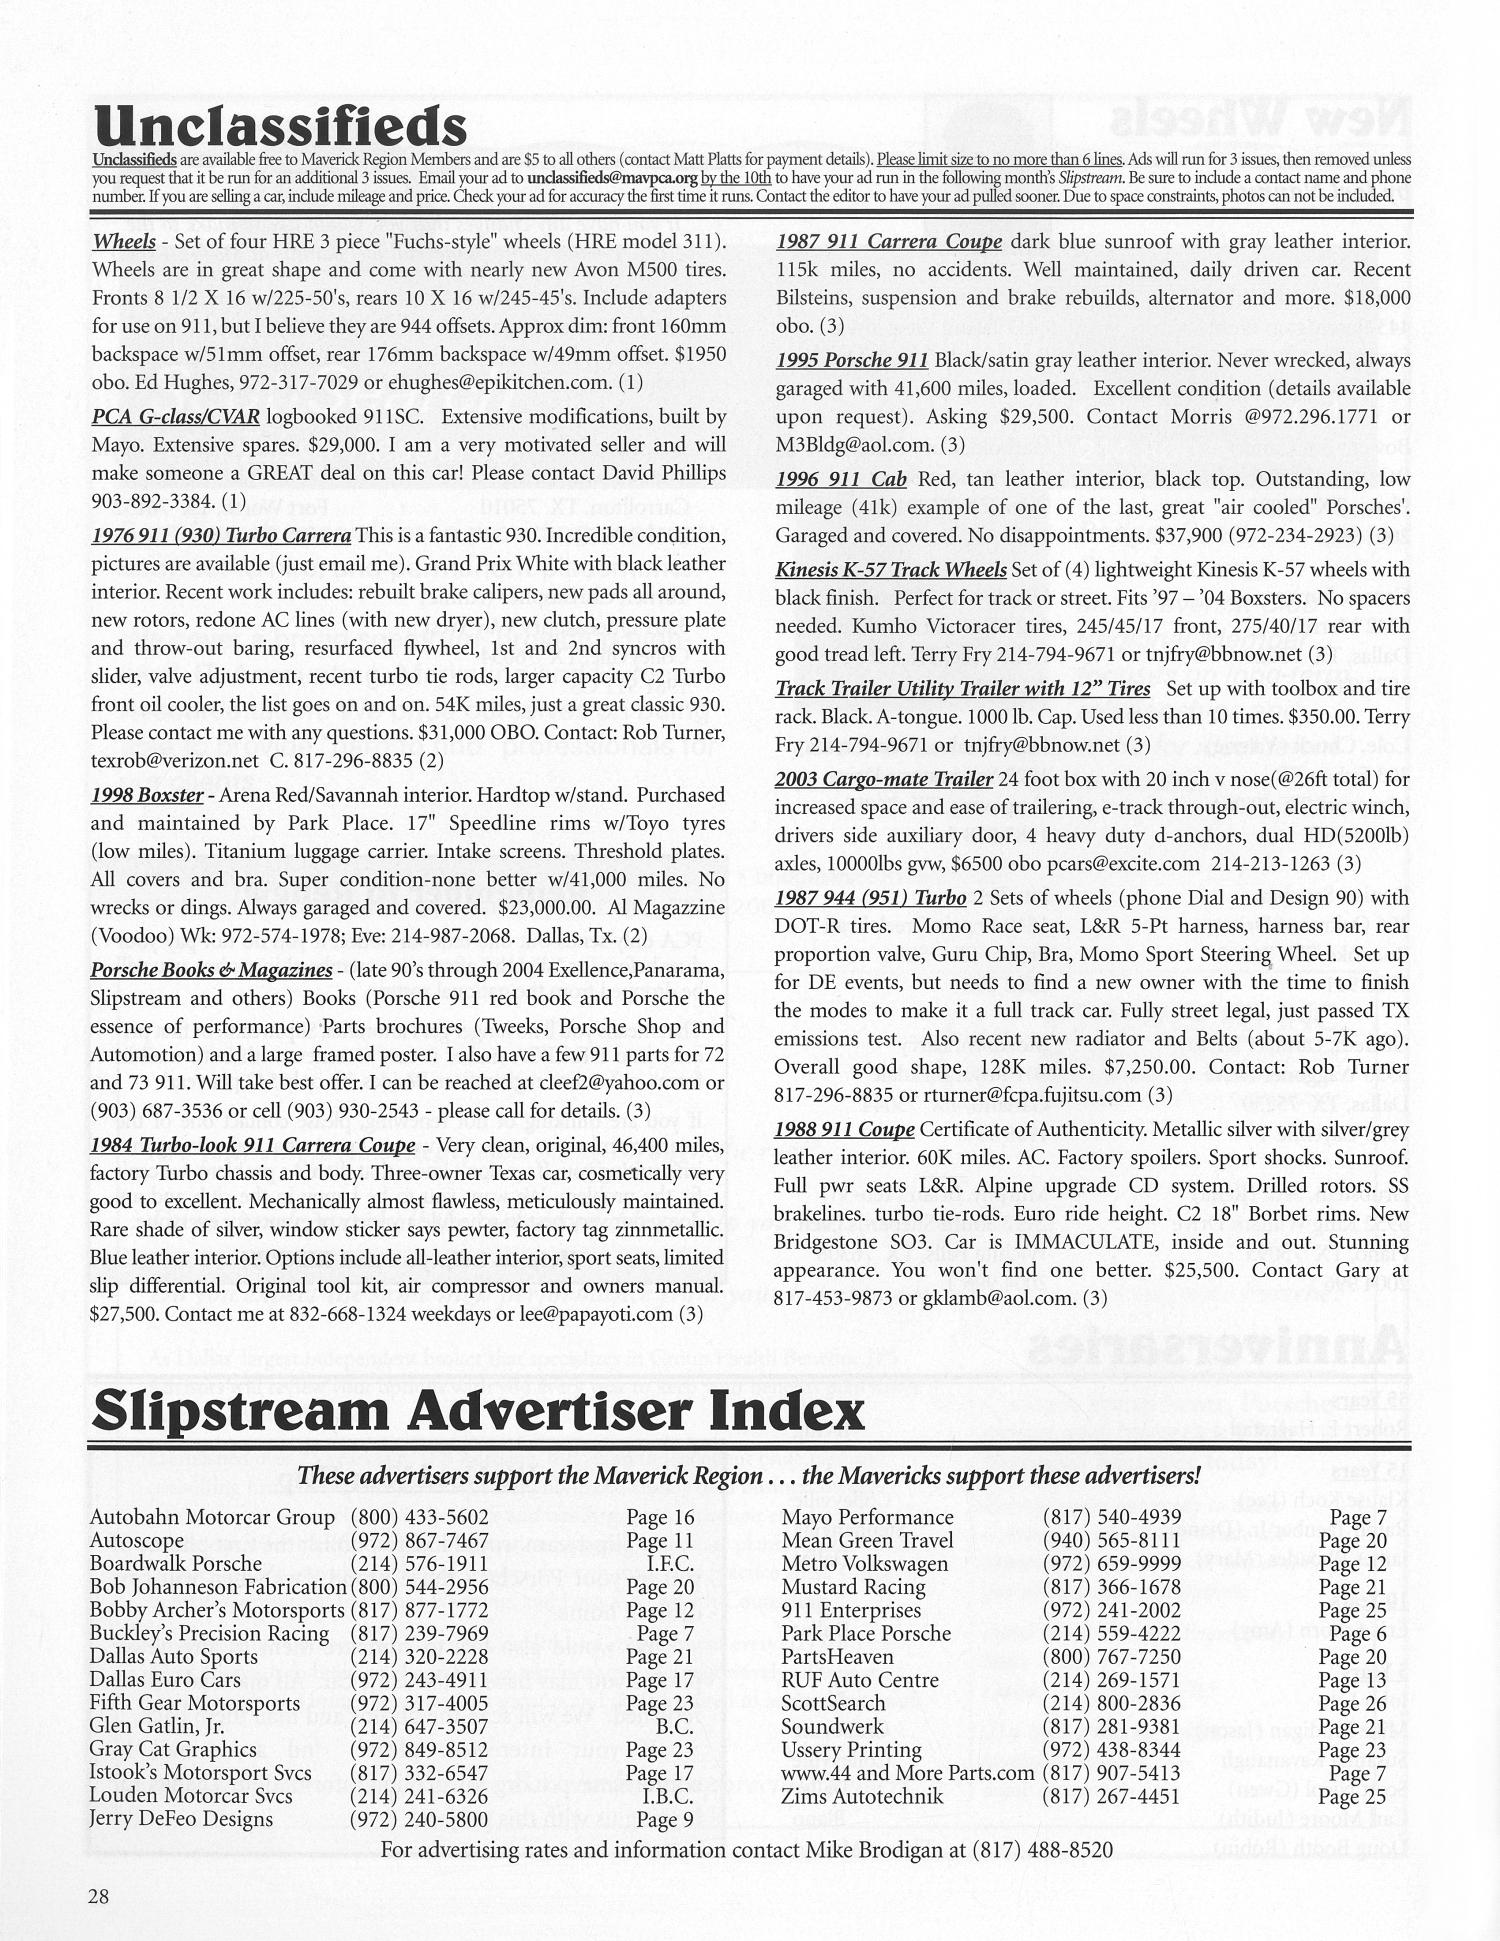 Slipstream, Volume 62, Number 7, July 2005
                                                
                                                    28
                                                